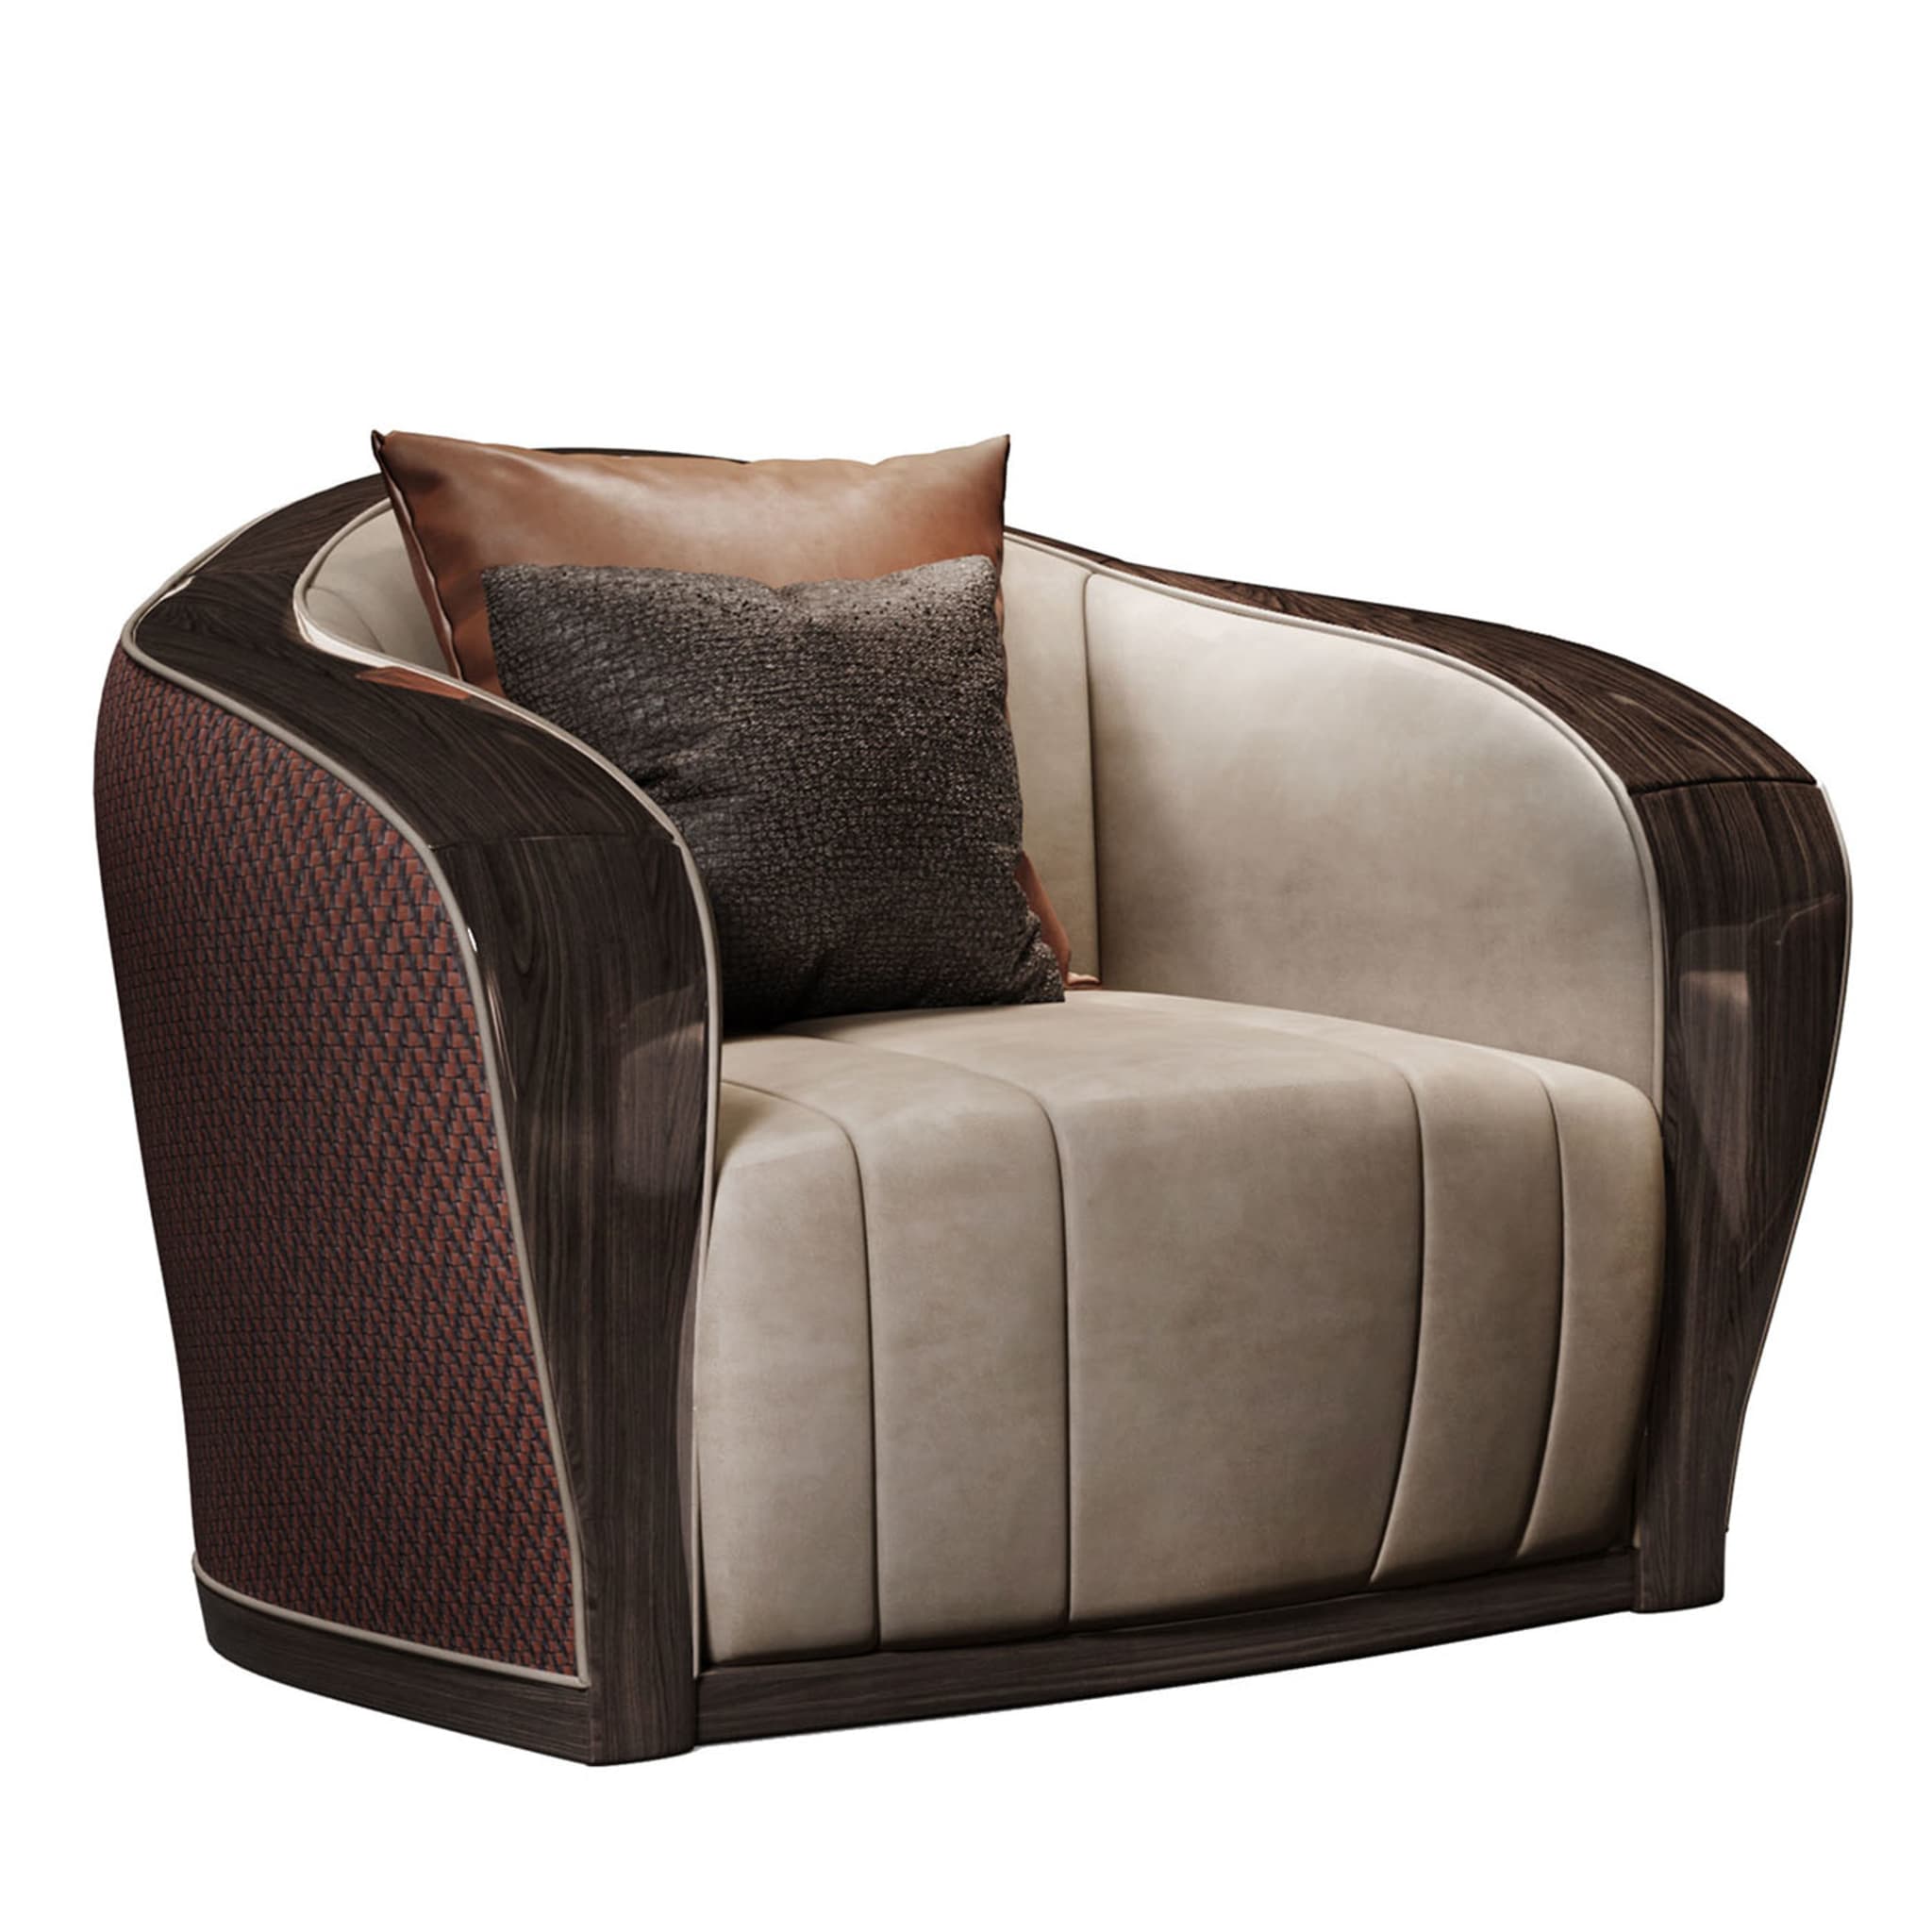 Castagno kanalisierter Sessel aus braunem Leder - Hauptansicht